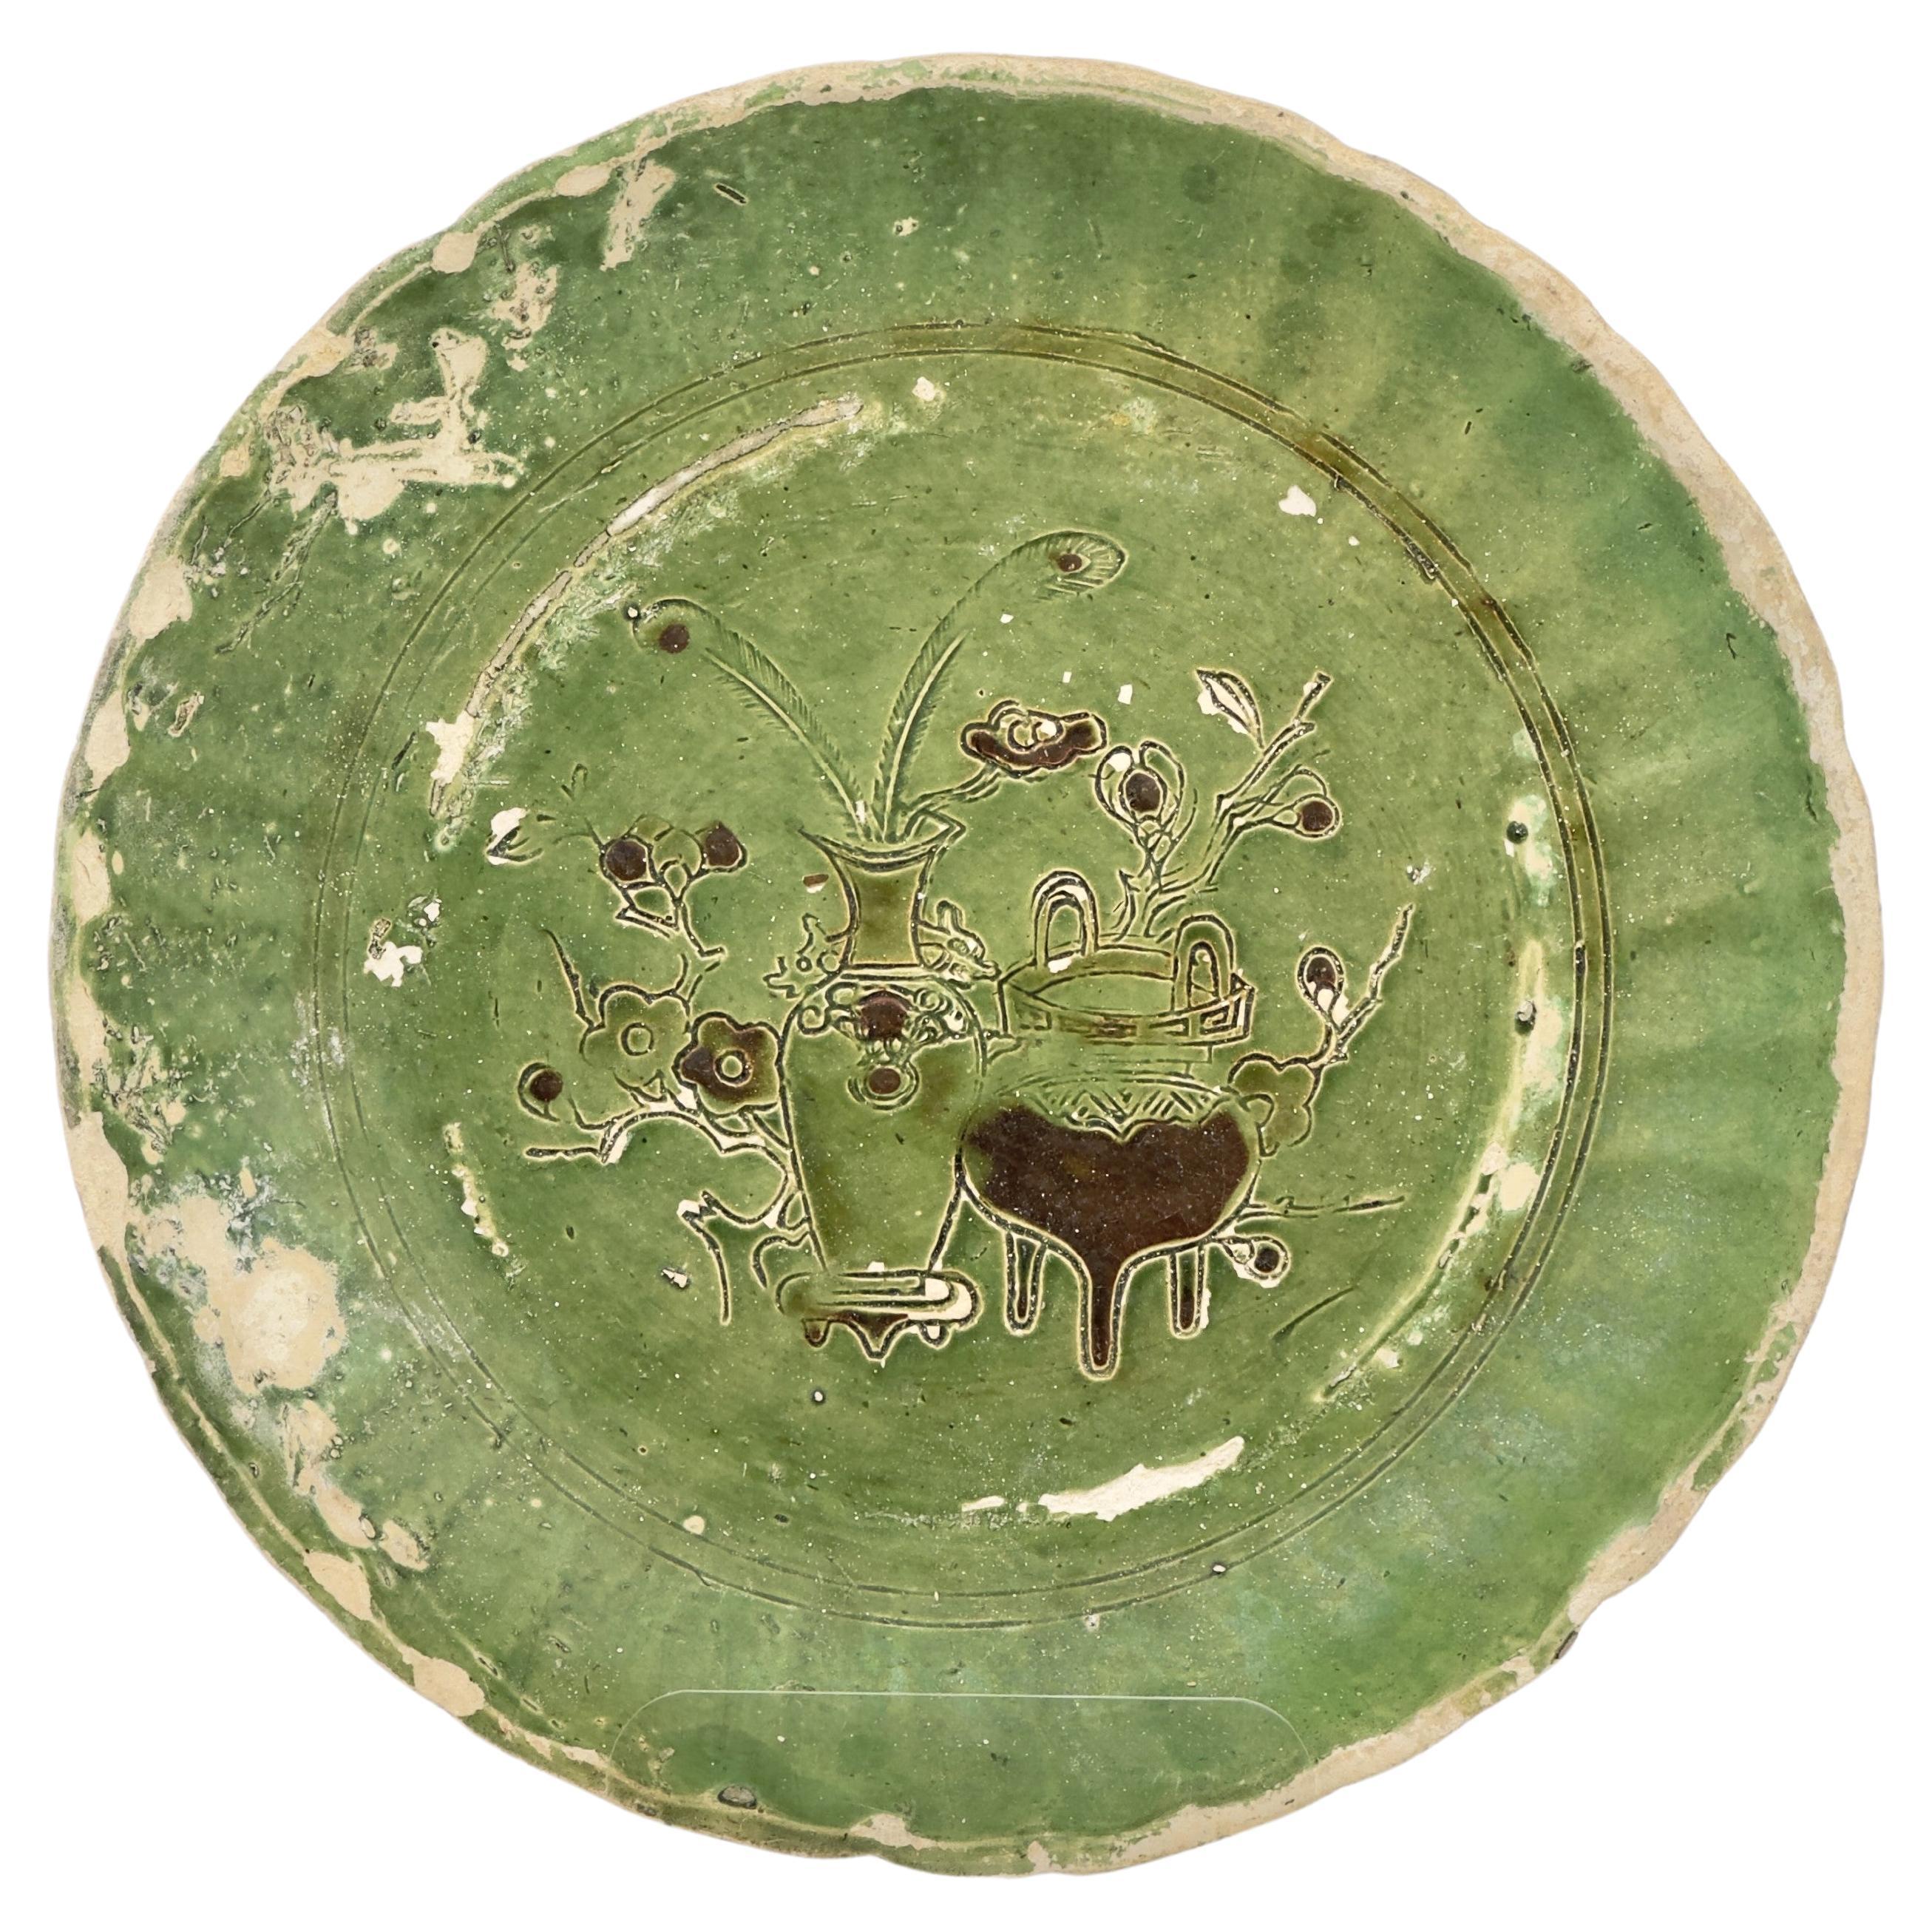 Schale aus grün glasiertem Steingut CIRCA 1725, Qing Dynasty, Yongzheng Reign